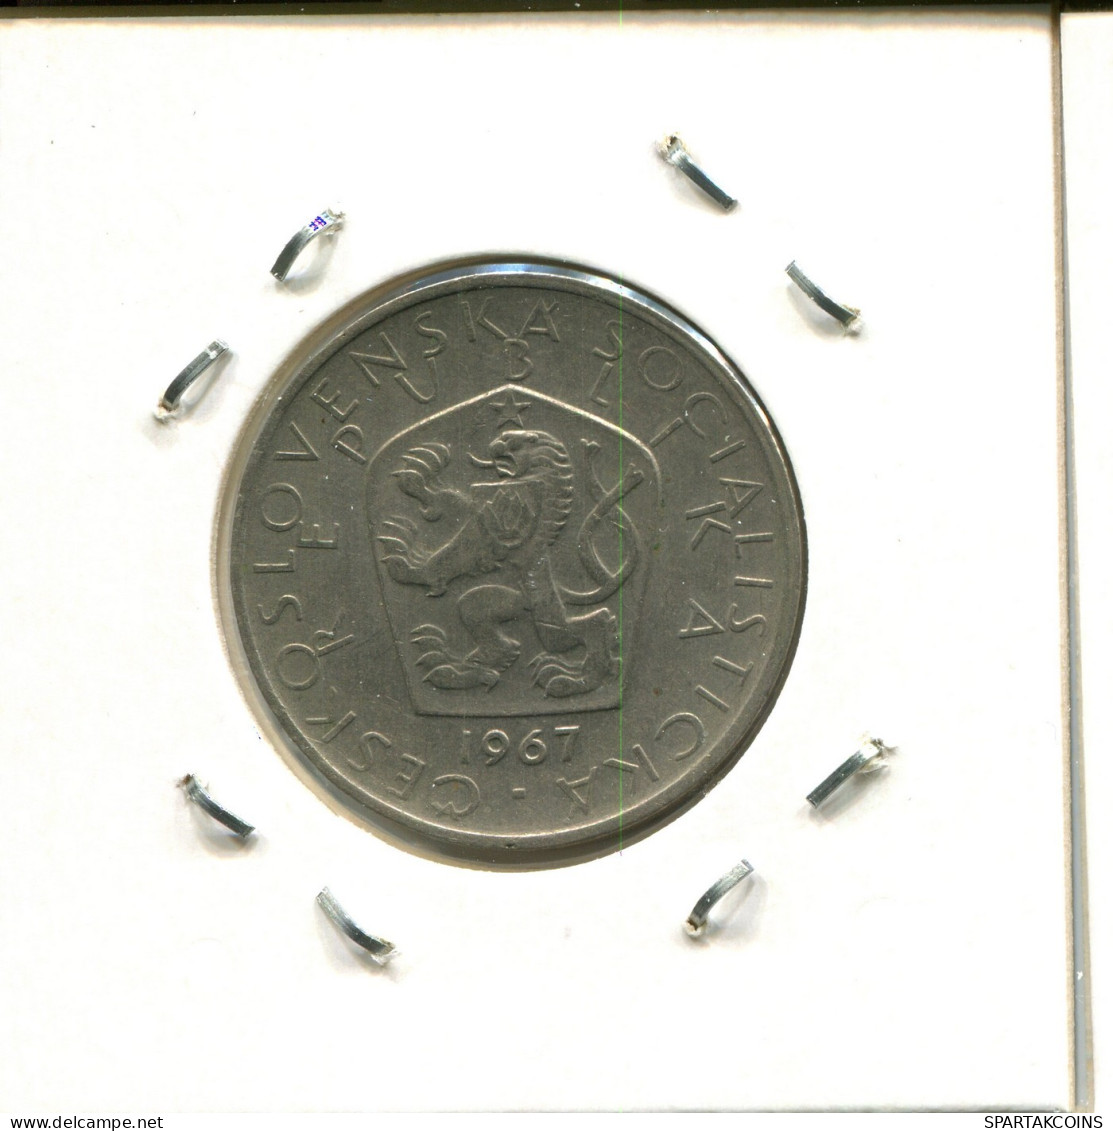 5 KORUN 1967 CZECHOSLOVAKIA Coin #AW847.U.A - Czechoslovakia